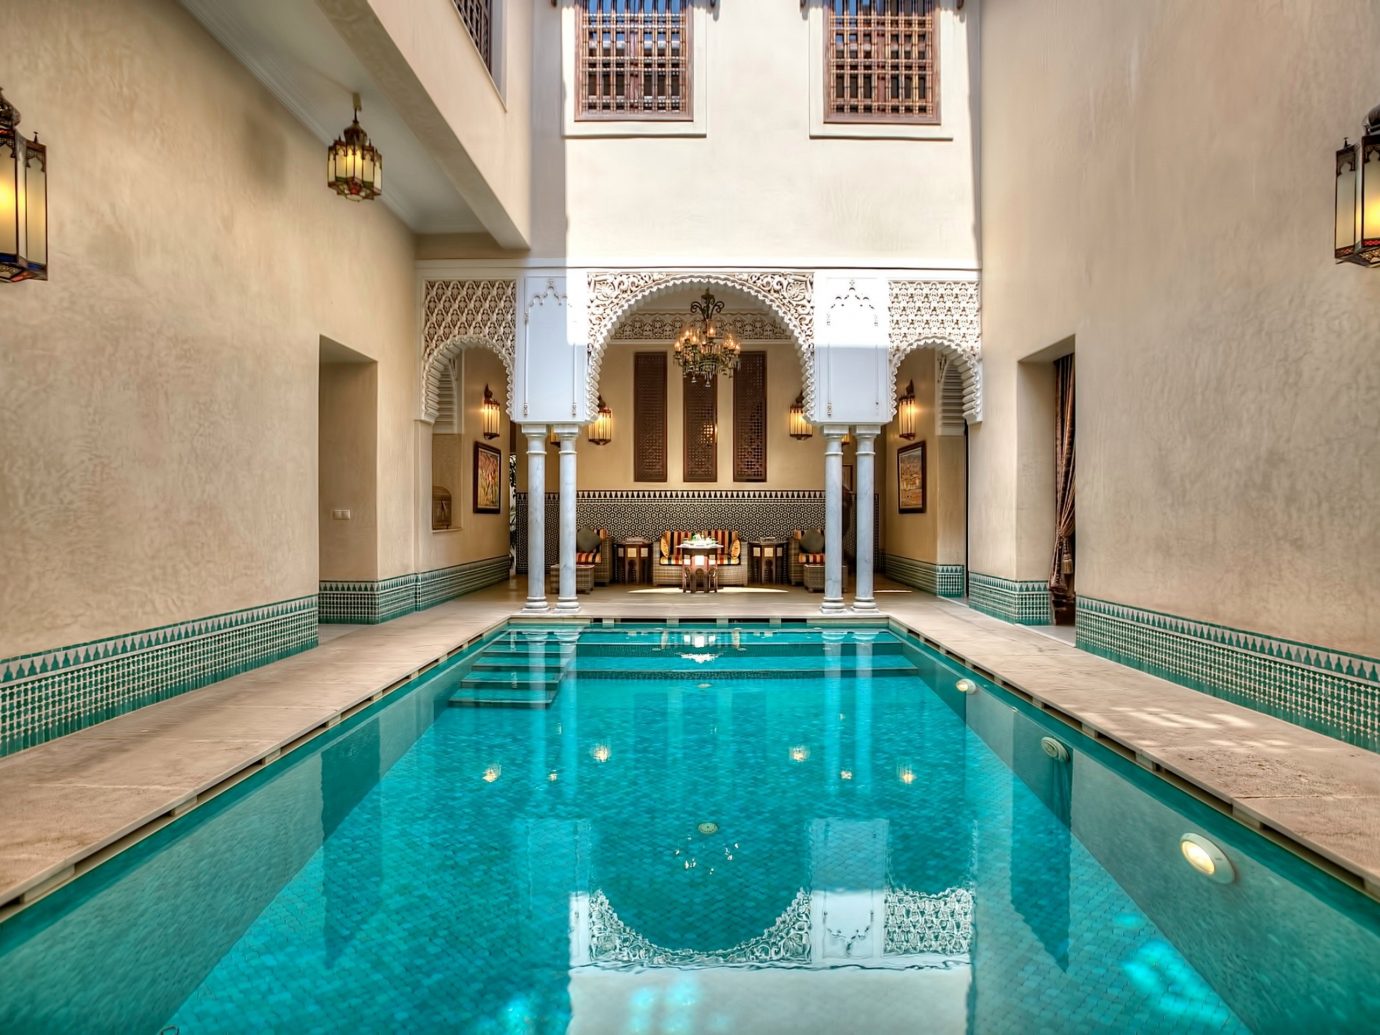 Hotels Trip Ideas swimming pool property indoor estate leisure mansion Villa